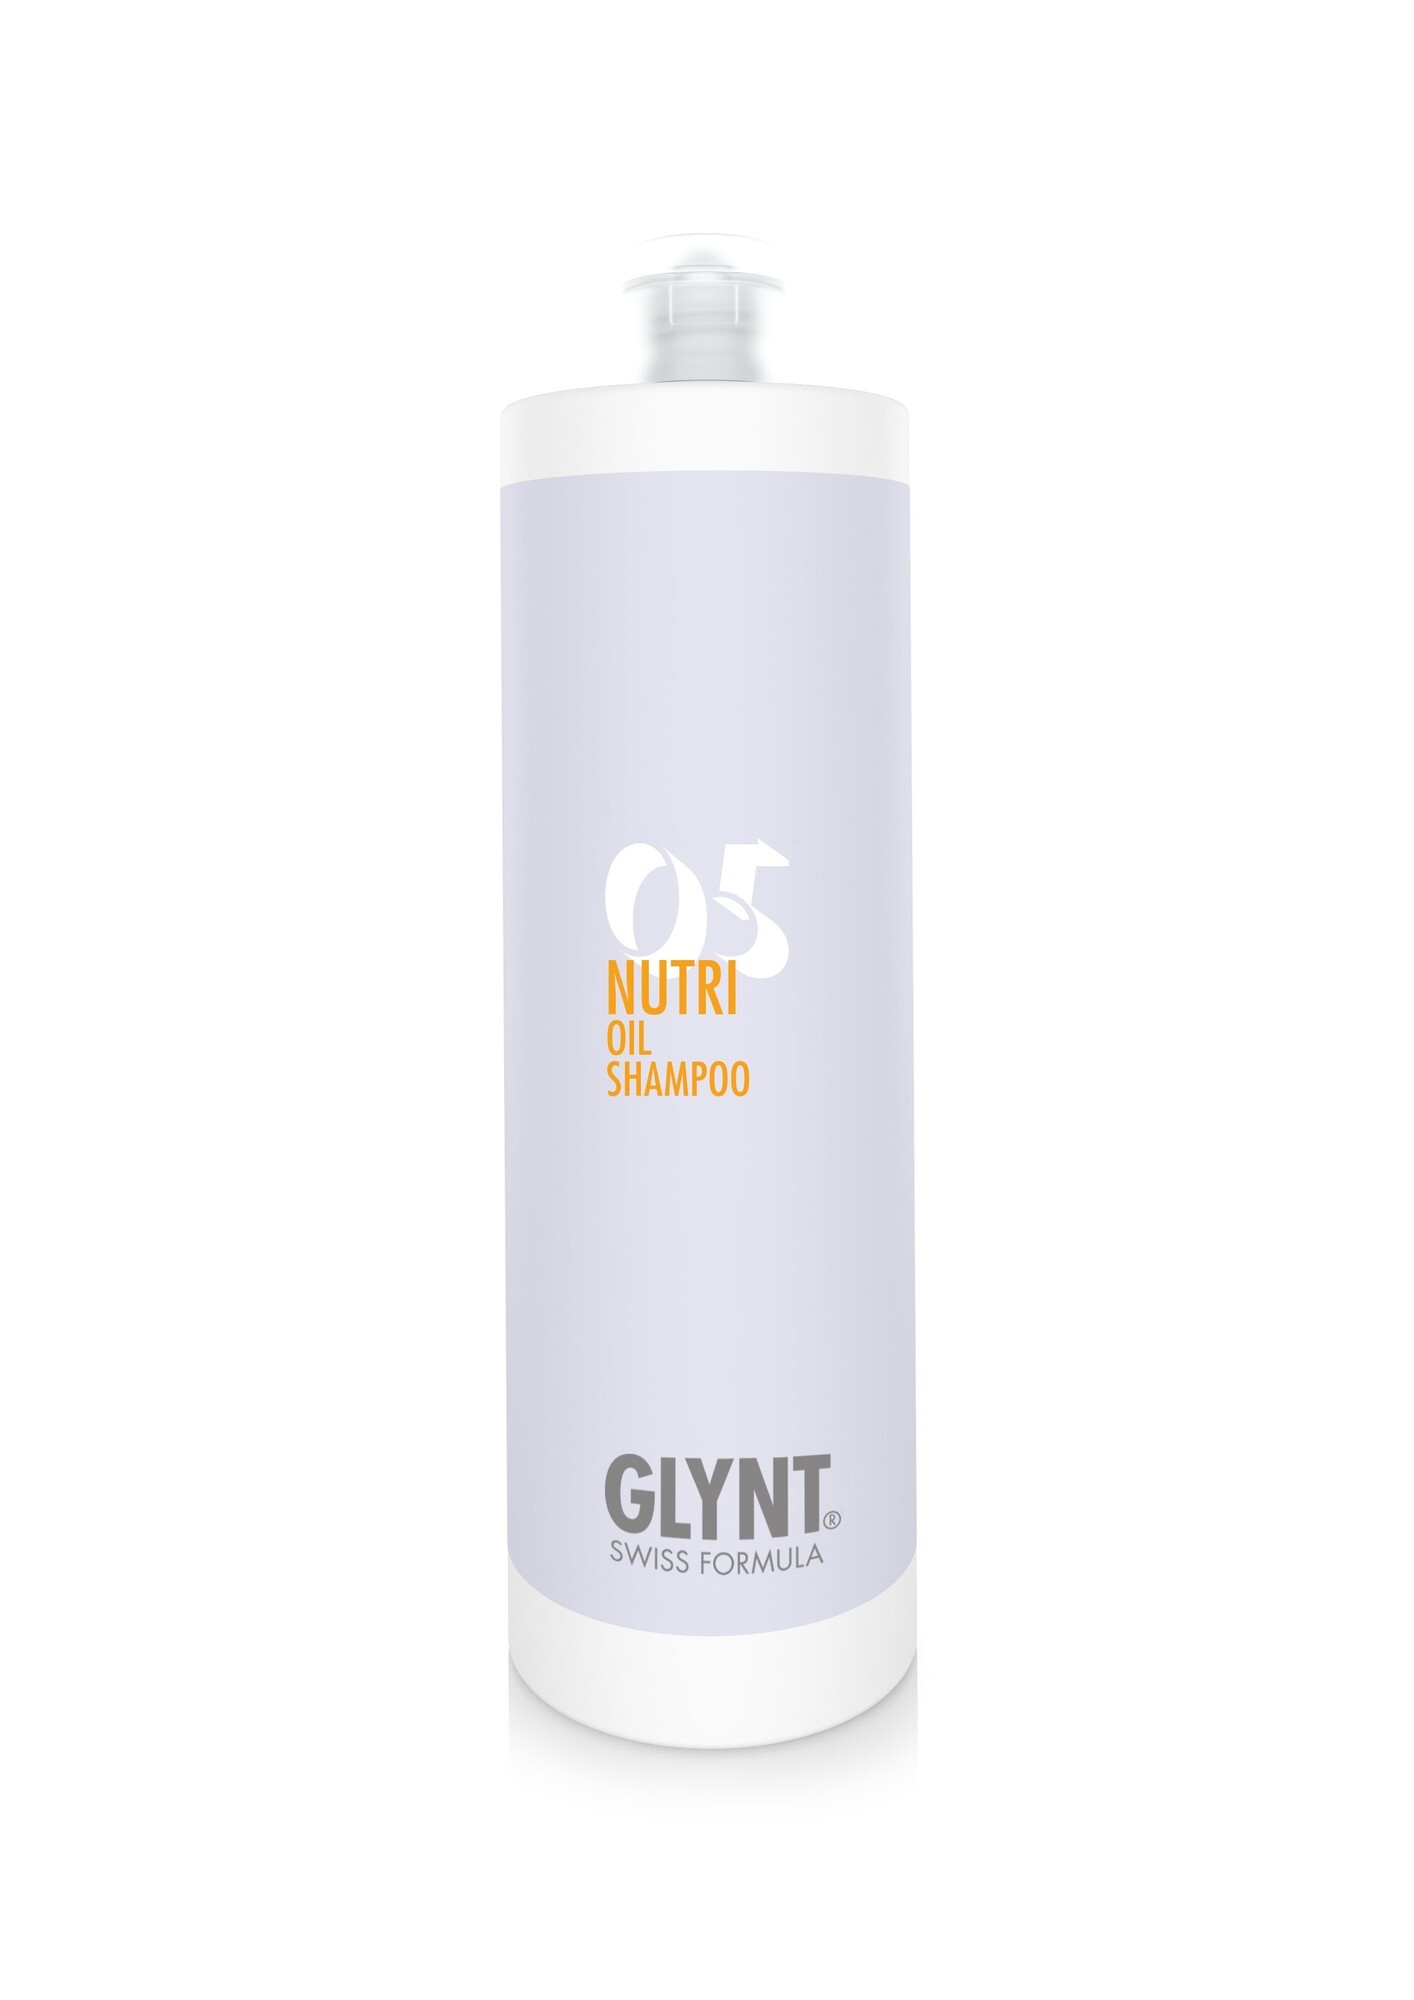 Glynt Nutri Oil Shampoo 5 1000ml